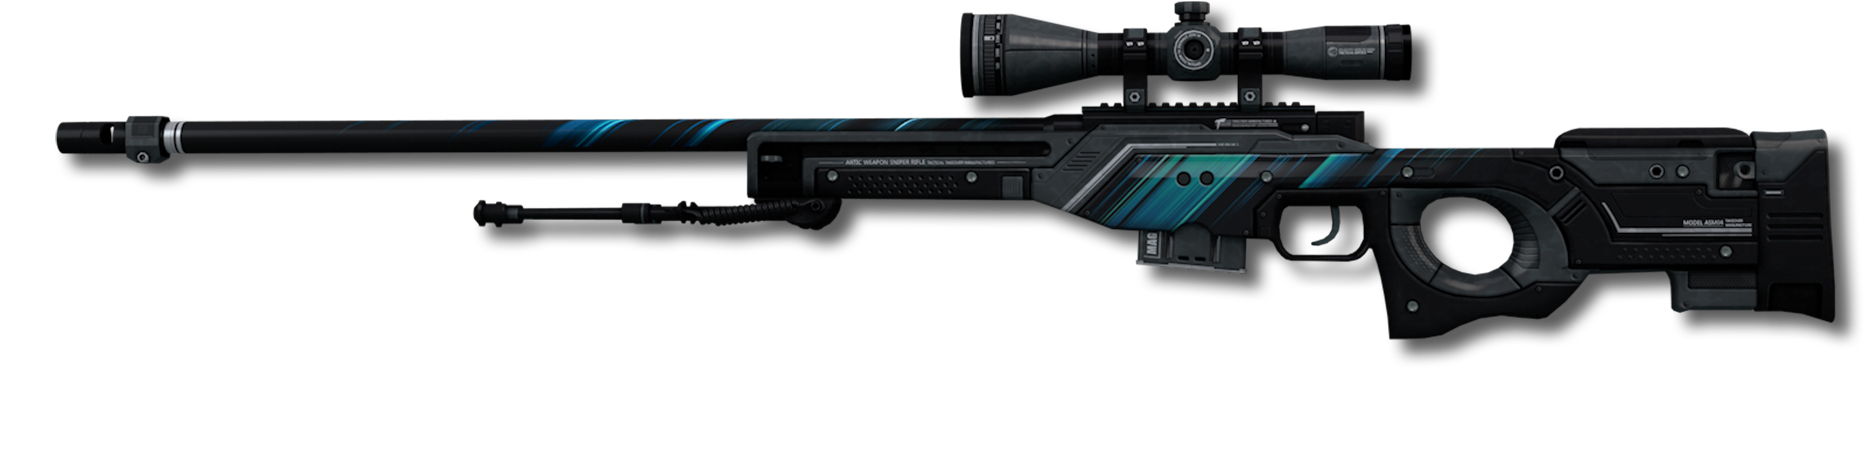 Futuristic Sniper Rifle Design PNG